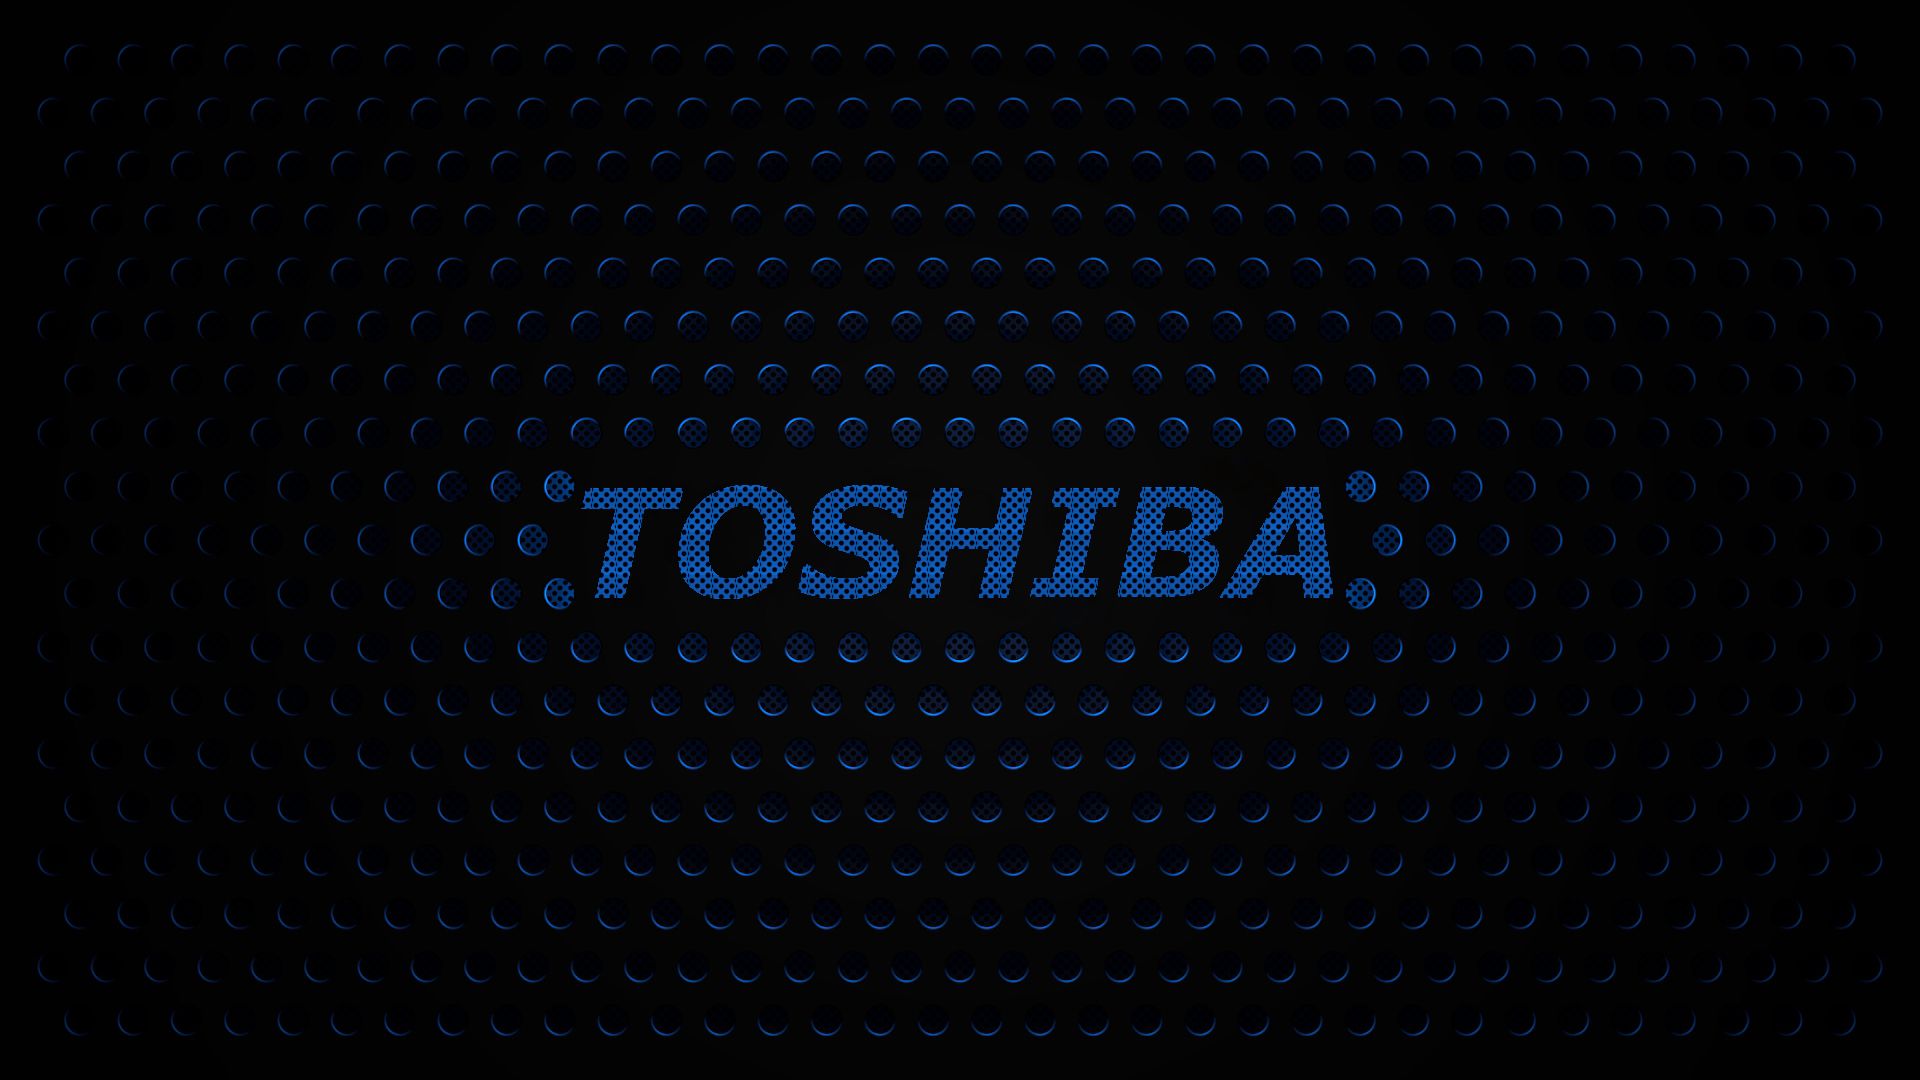 Toshiba by Daproba on DeviantArt